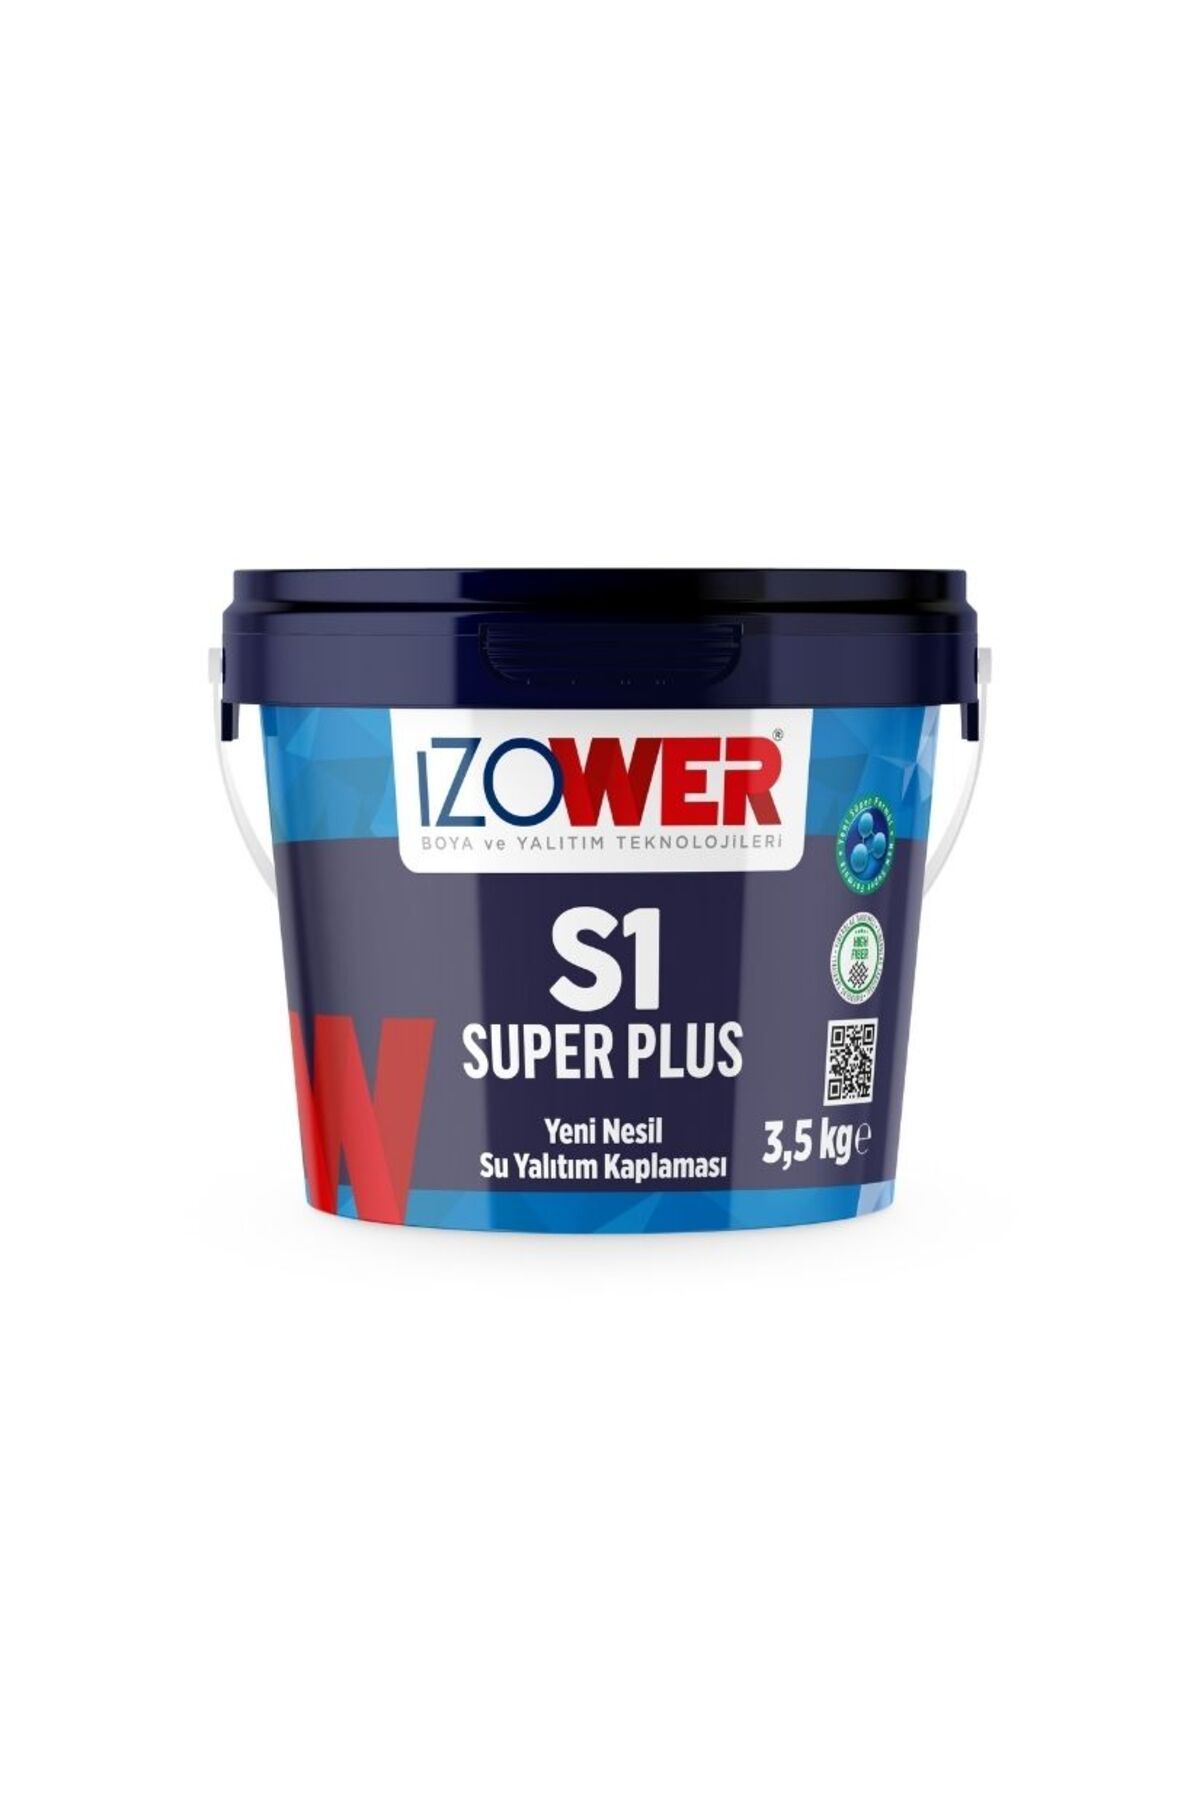 izower S1 Süper Plus Su Yalıtım Kaplaması- Mavi- 3.5 Kg